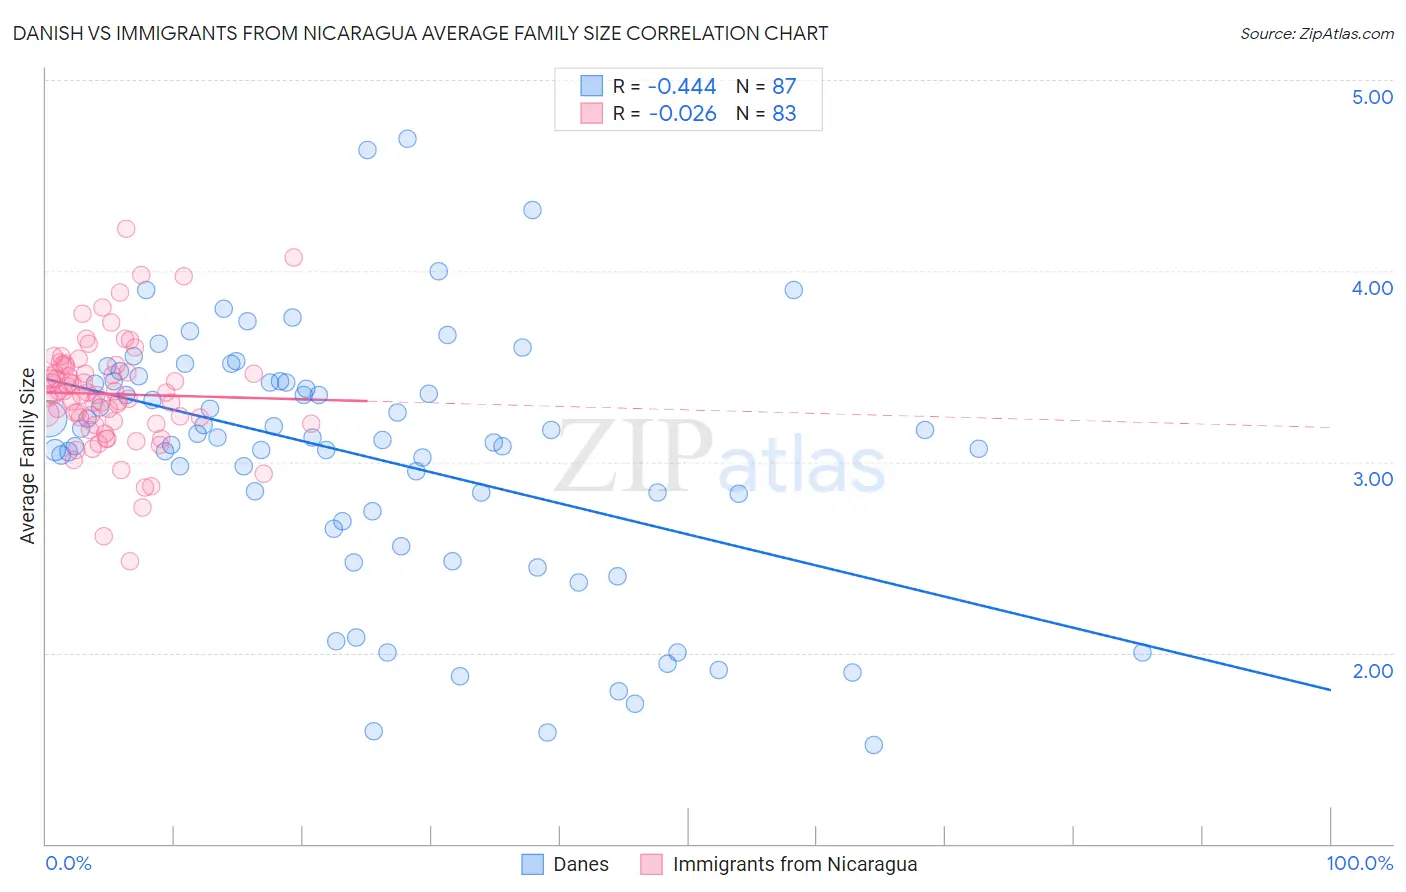 Danish vs Immigrants from Nicaragua Average Family Size